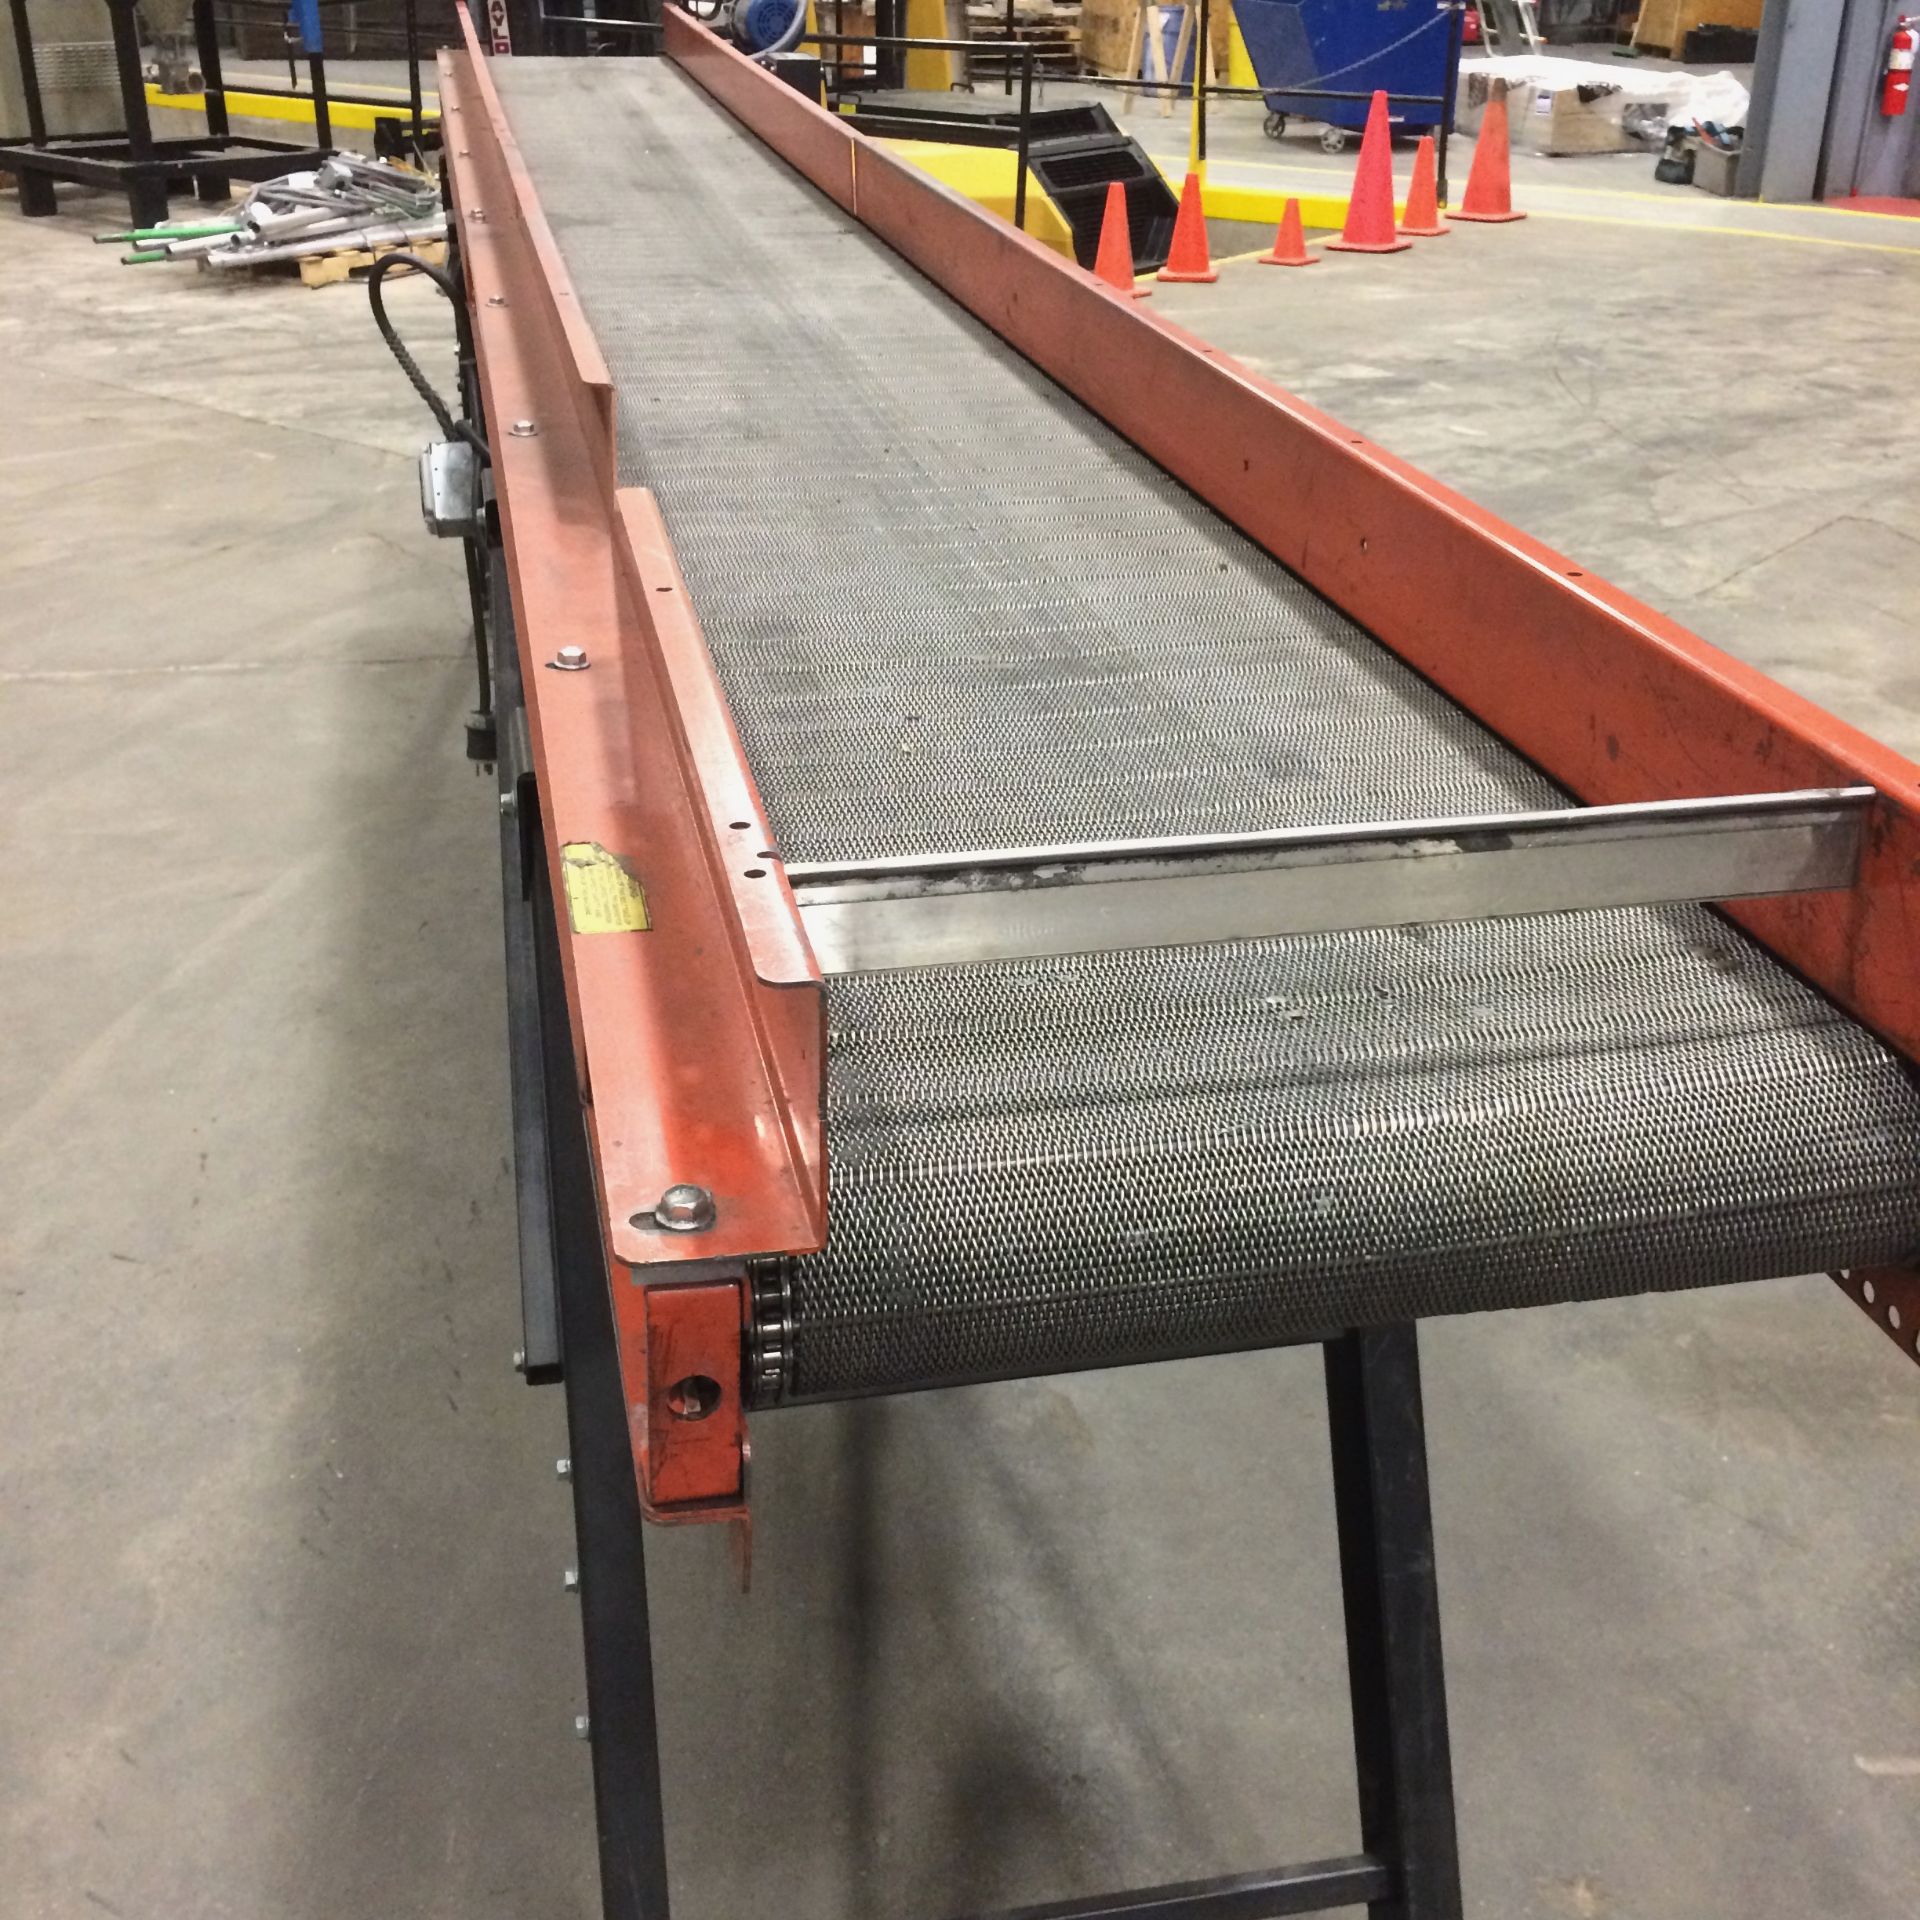 16 ft. EMI Steel-Mesh Belt Portable Conveyor | Model: RMC-18-16-6 - Image 2 of 5